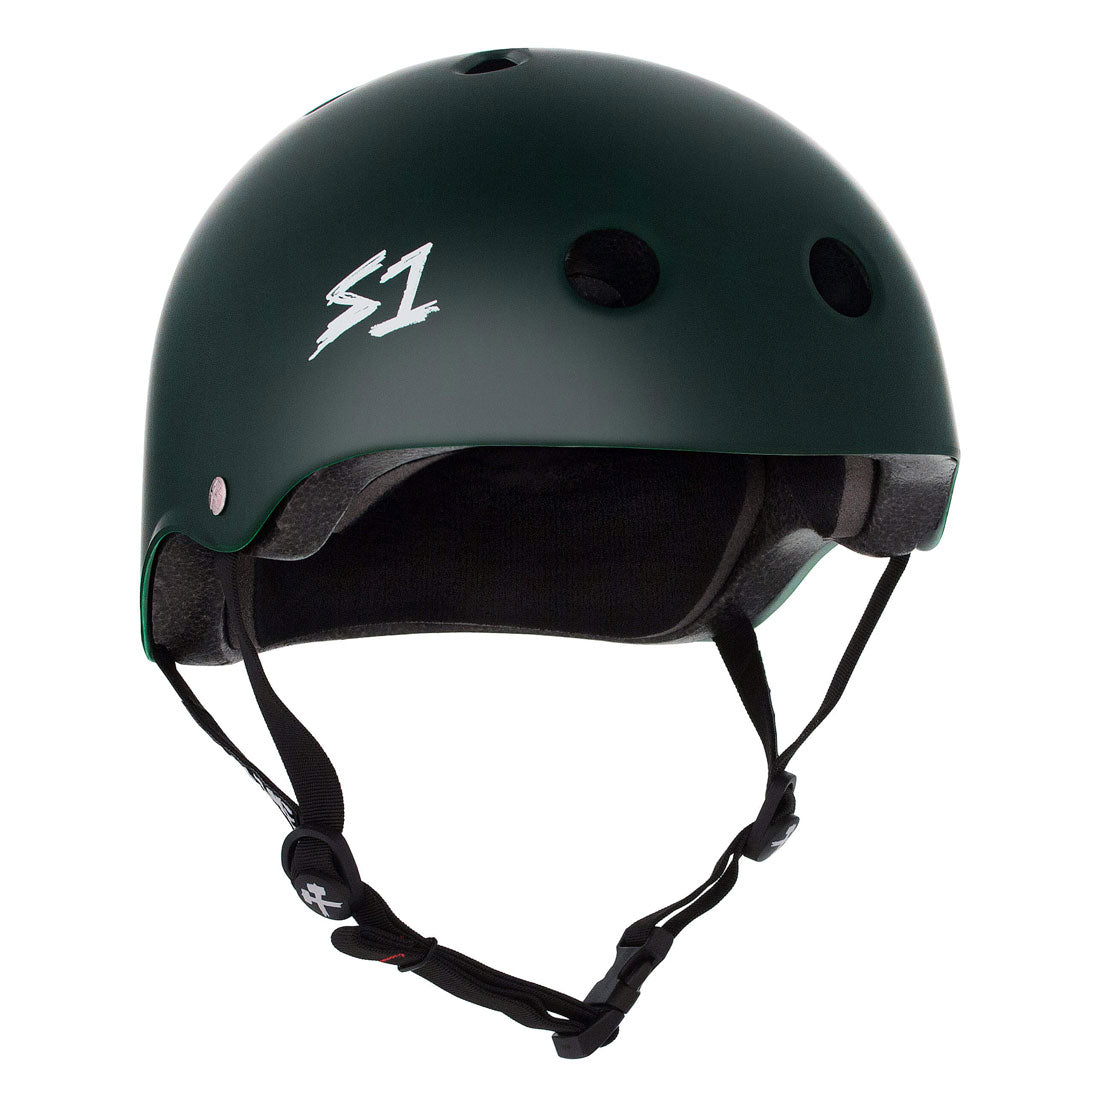 S-One Lifer Helmet - Dark Green Matte Helmets